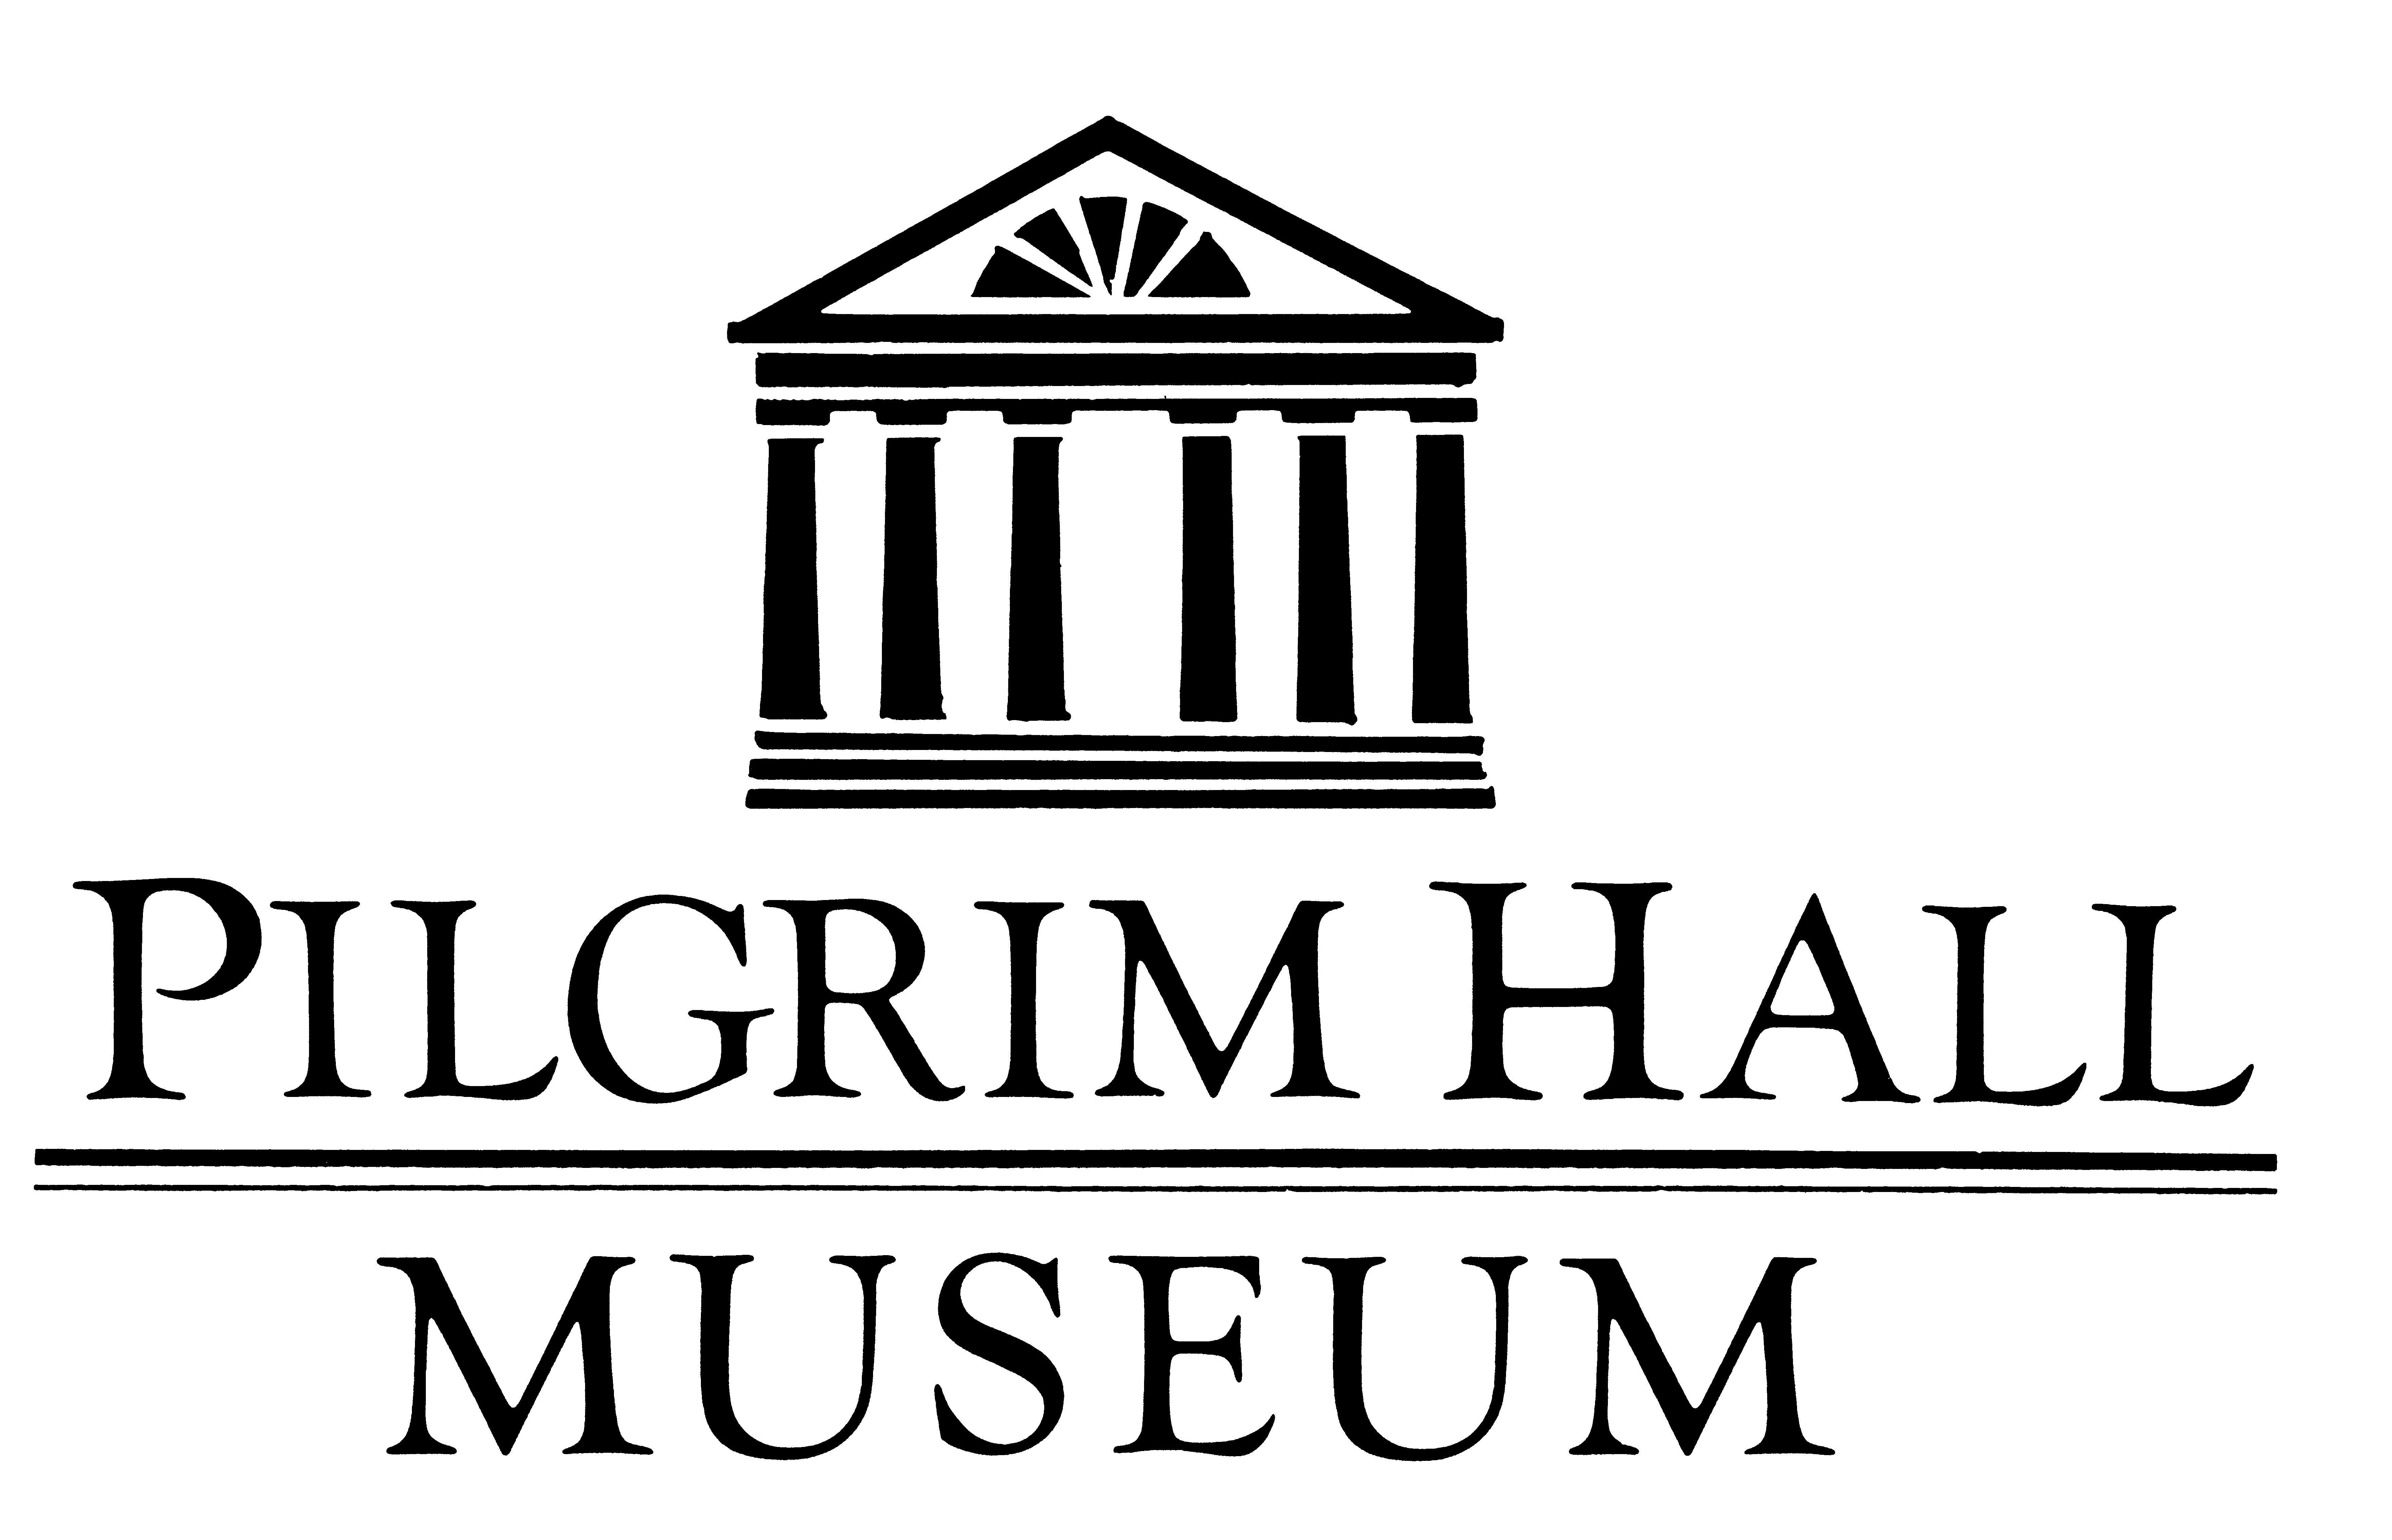 Hall Logo - About our Catablog | The Official Catablog of Pilgrim Hall Museum